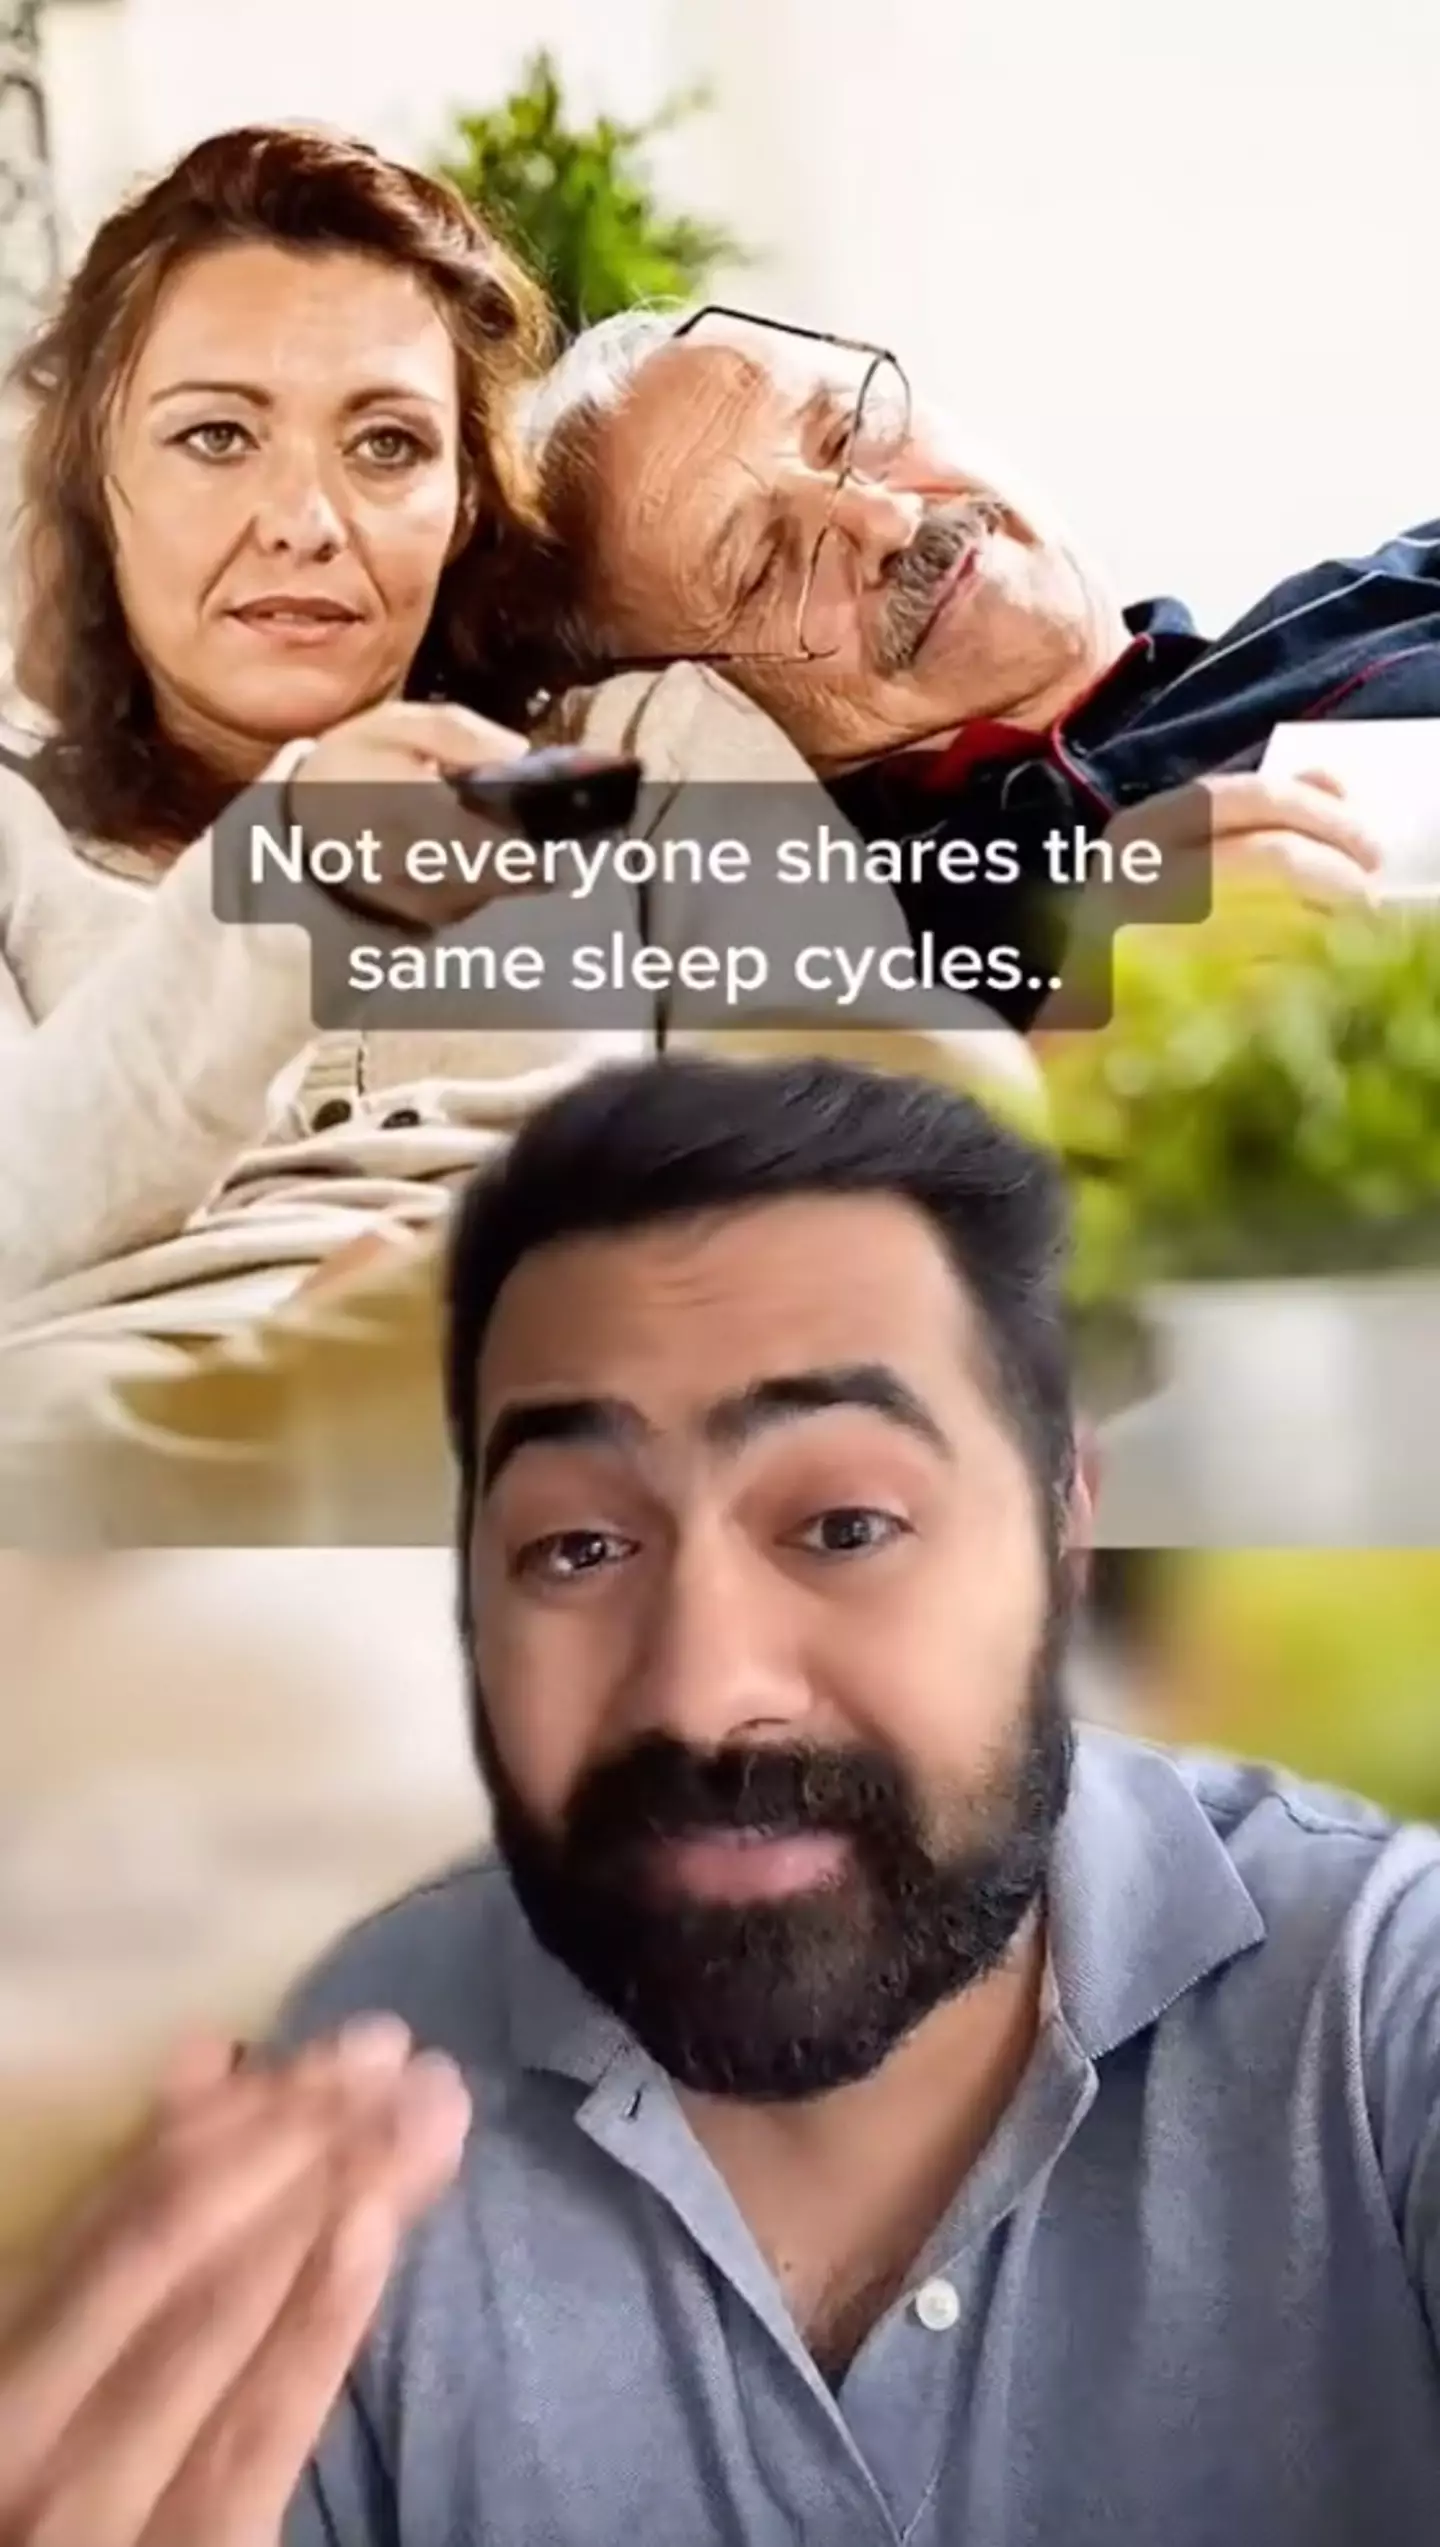 He says not everyone shares the same sleep cycles (